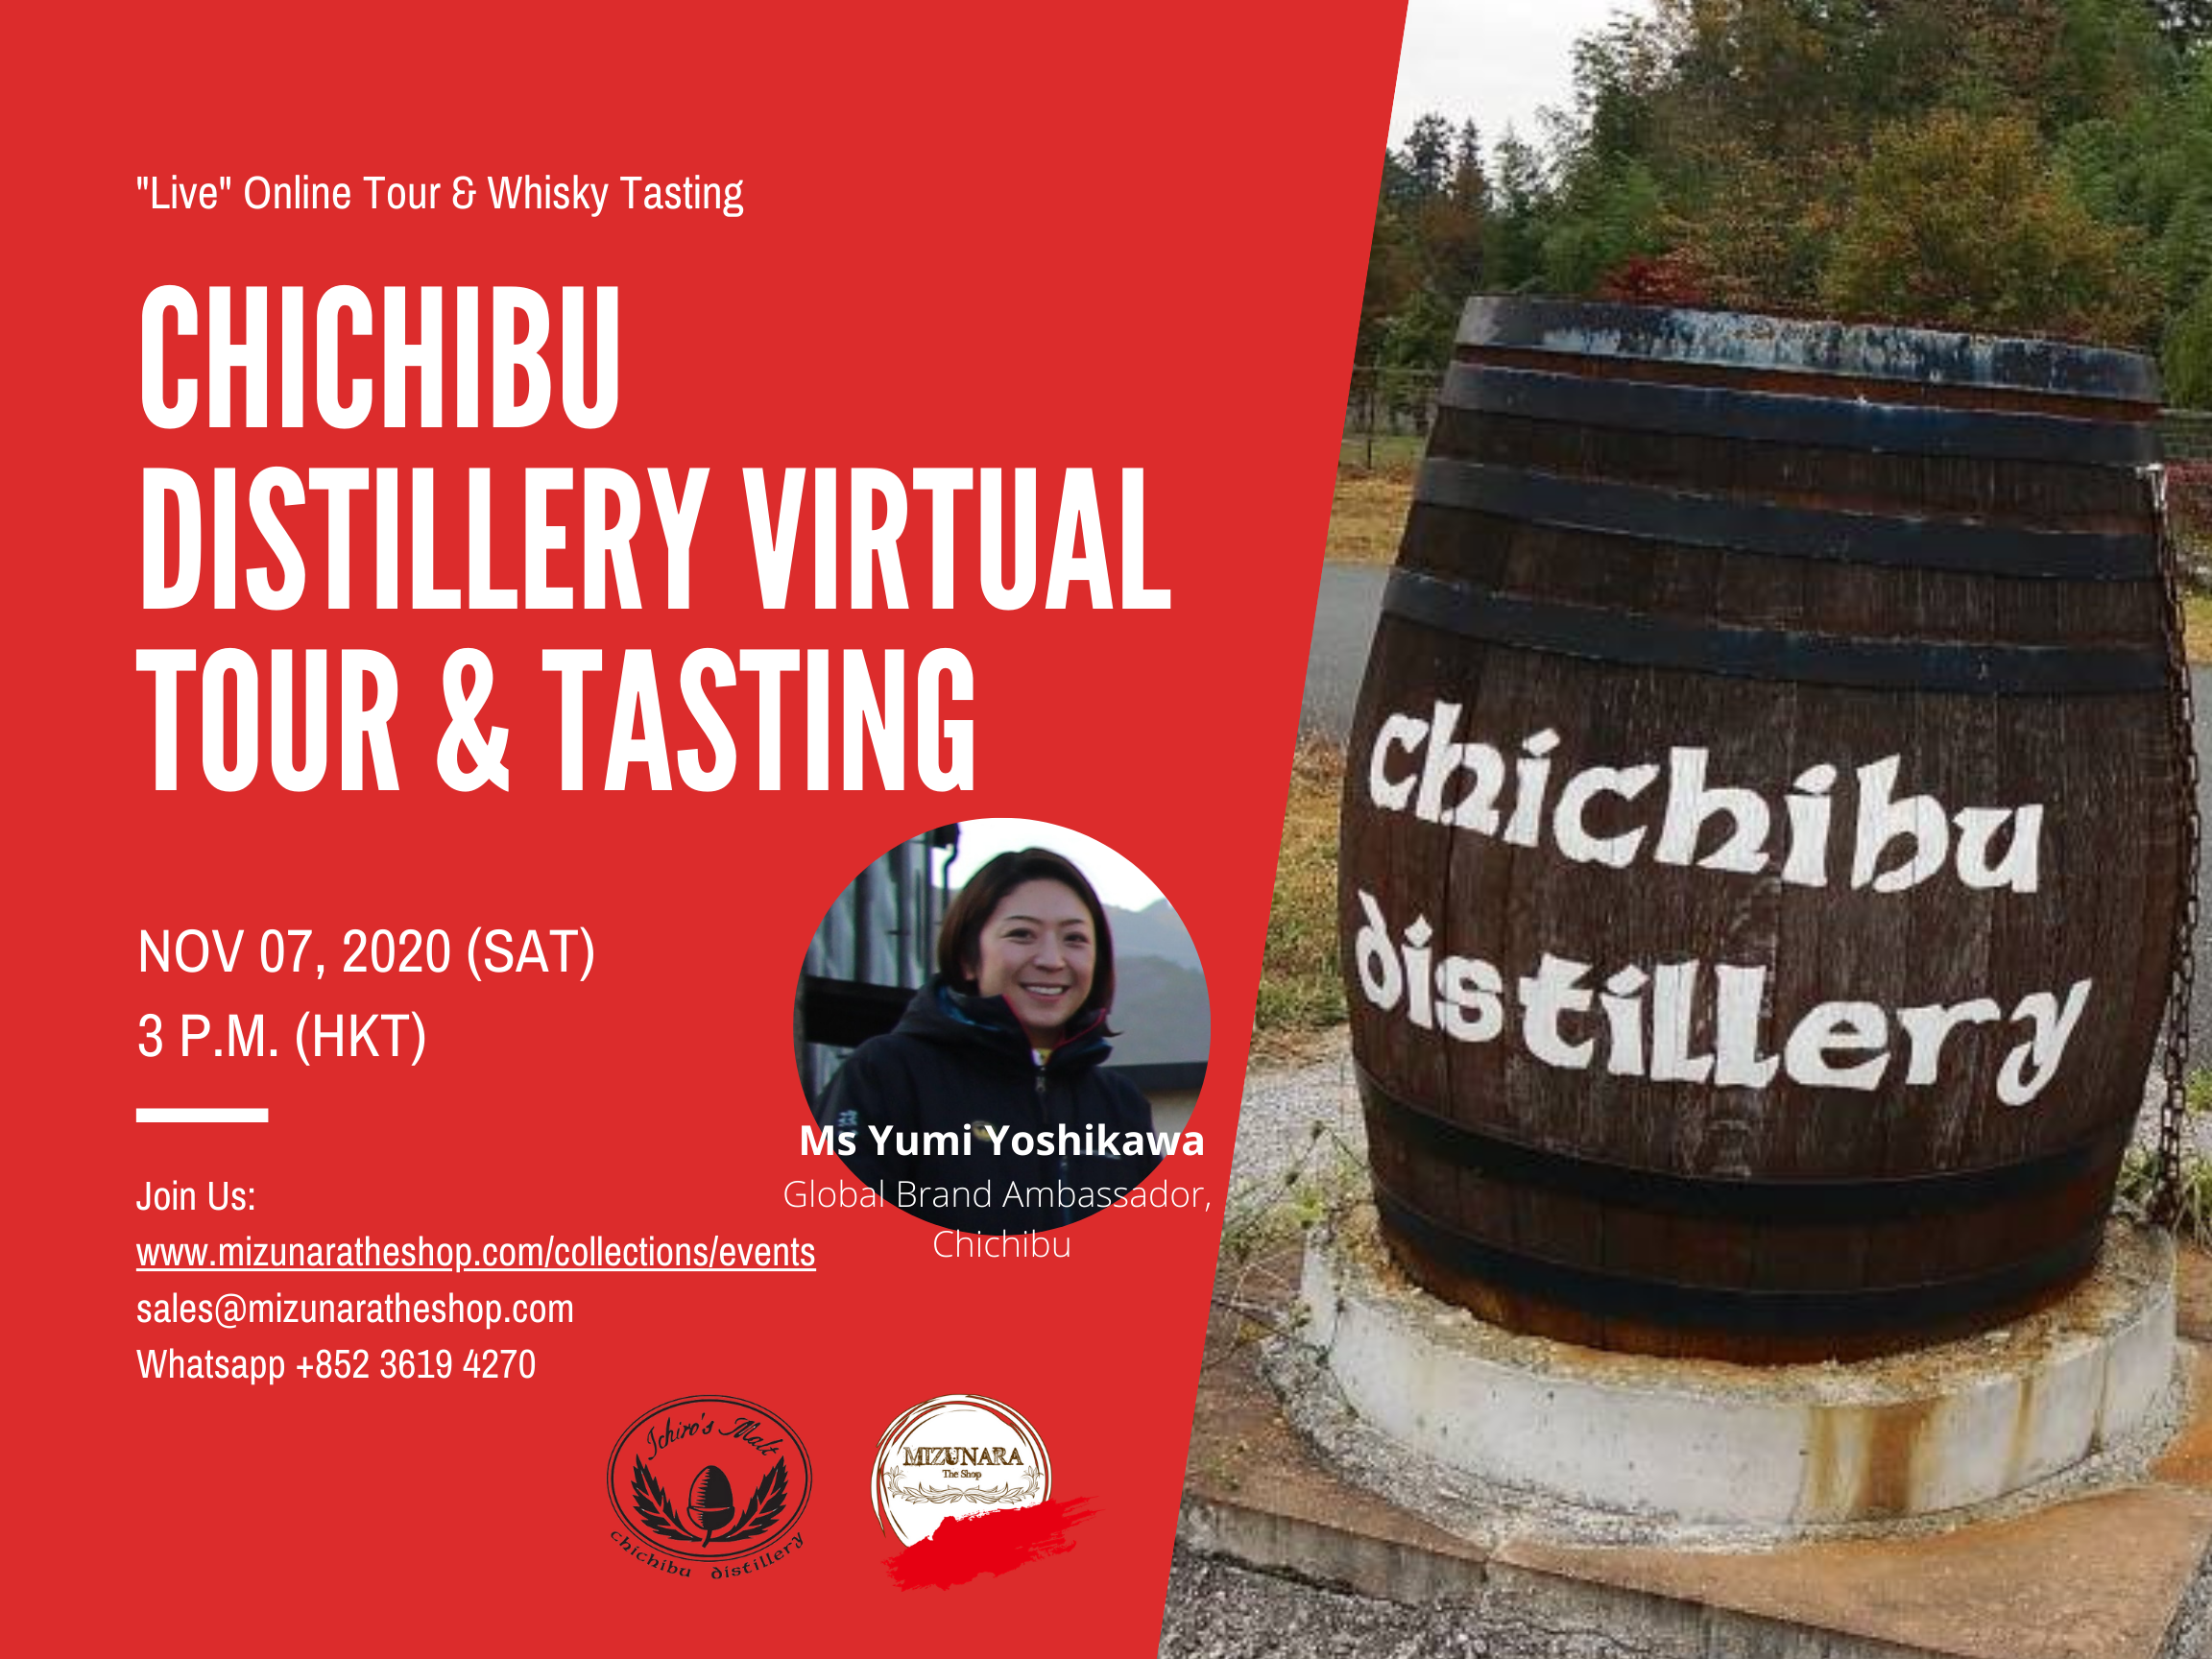 Chichibu Whisky Distillery Virtual Tour & Tasting Event November 07th 2020 3 p.m. HKT - 0